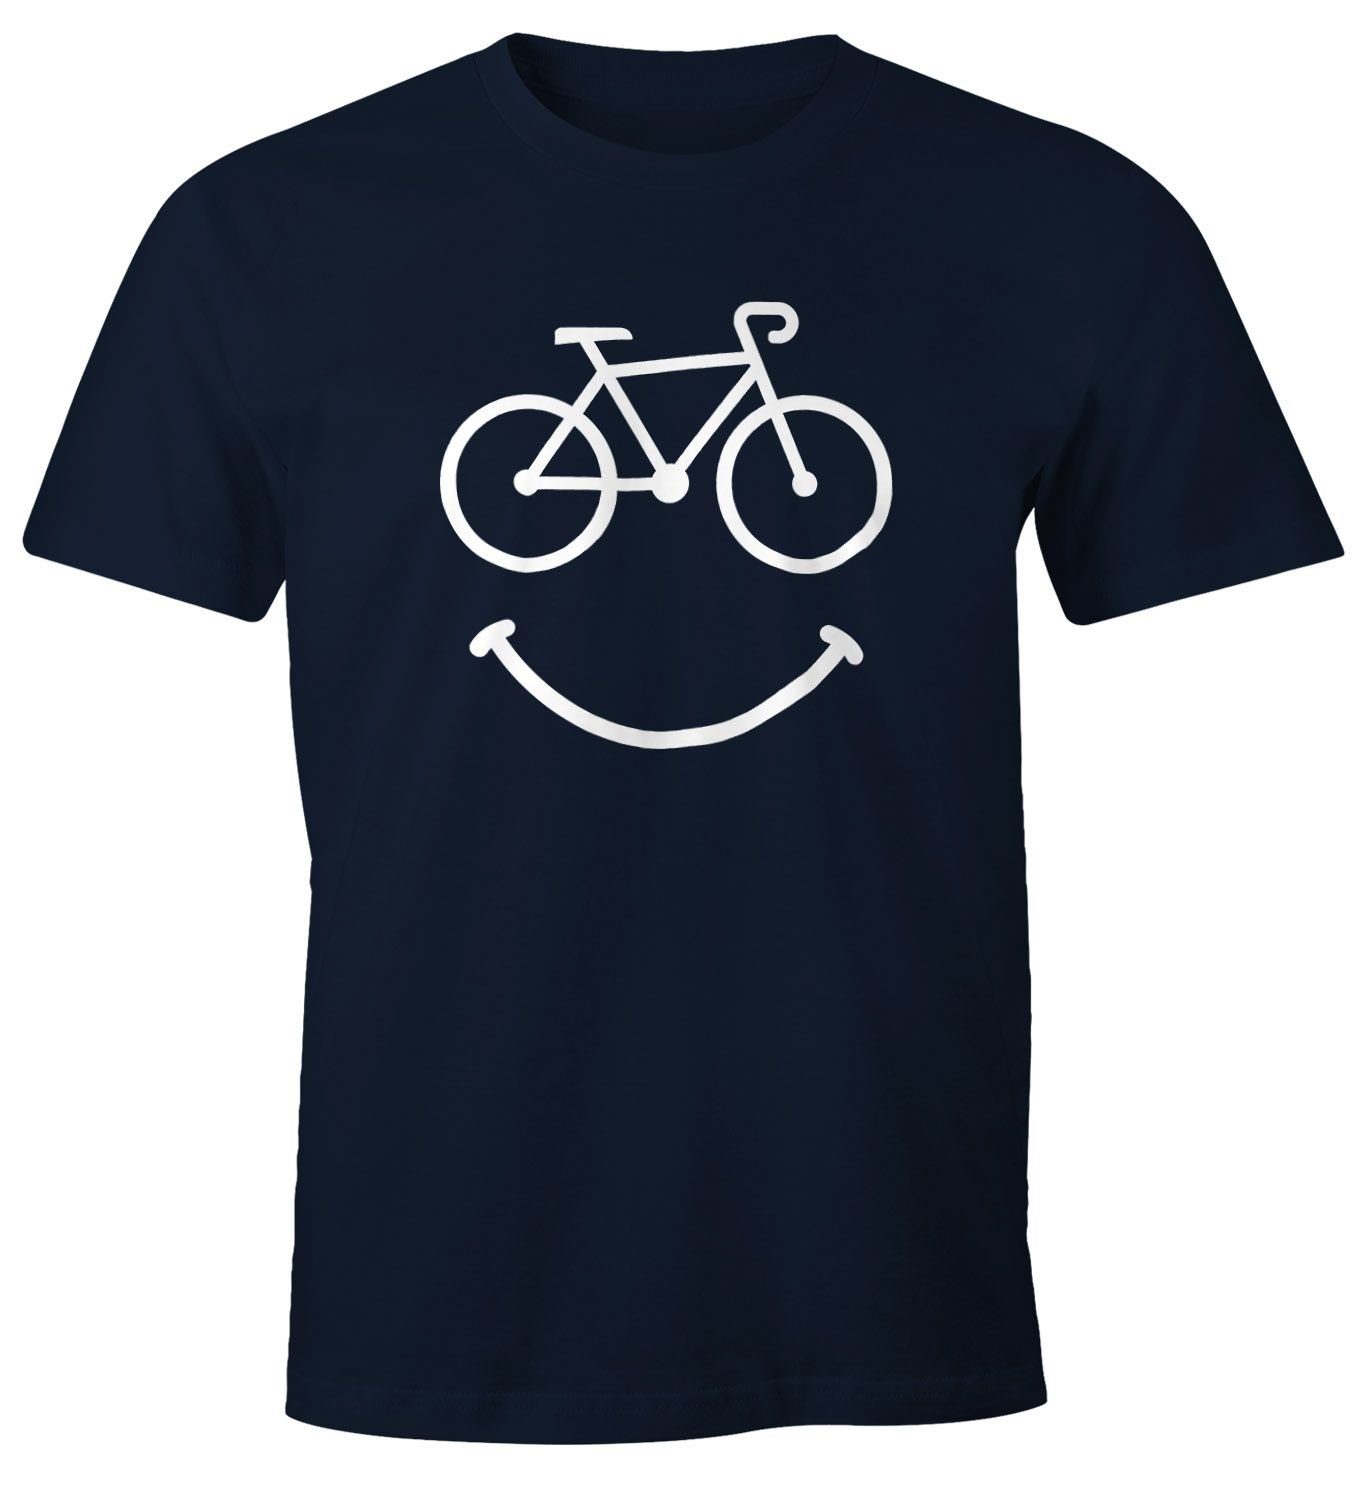 MoonWorks Print-Shirt Fahrrad Herren T-Shirt Smile Happy Bike Radfahren Fun-Shirt Moonworks® mit Print navy